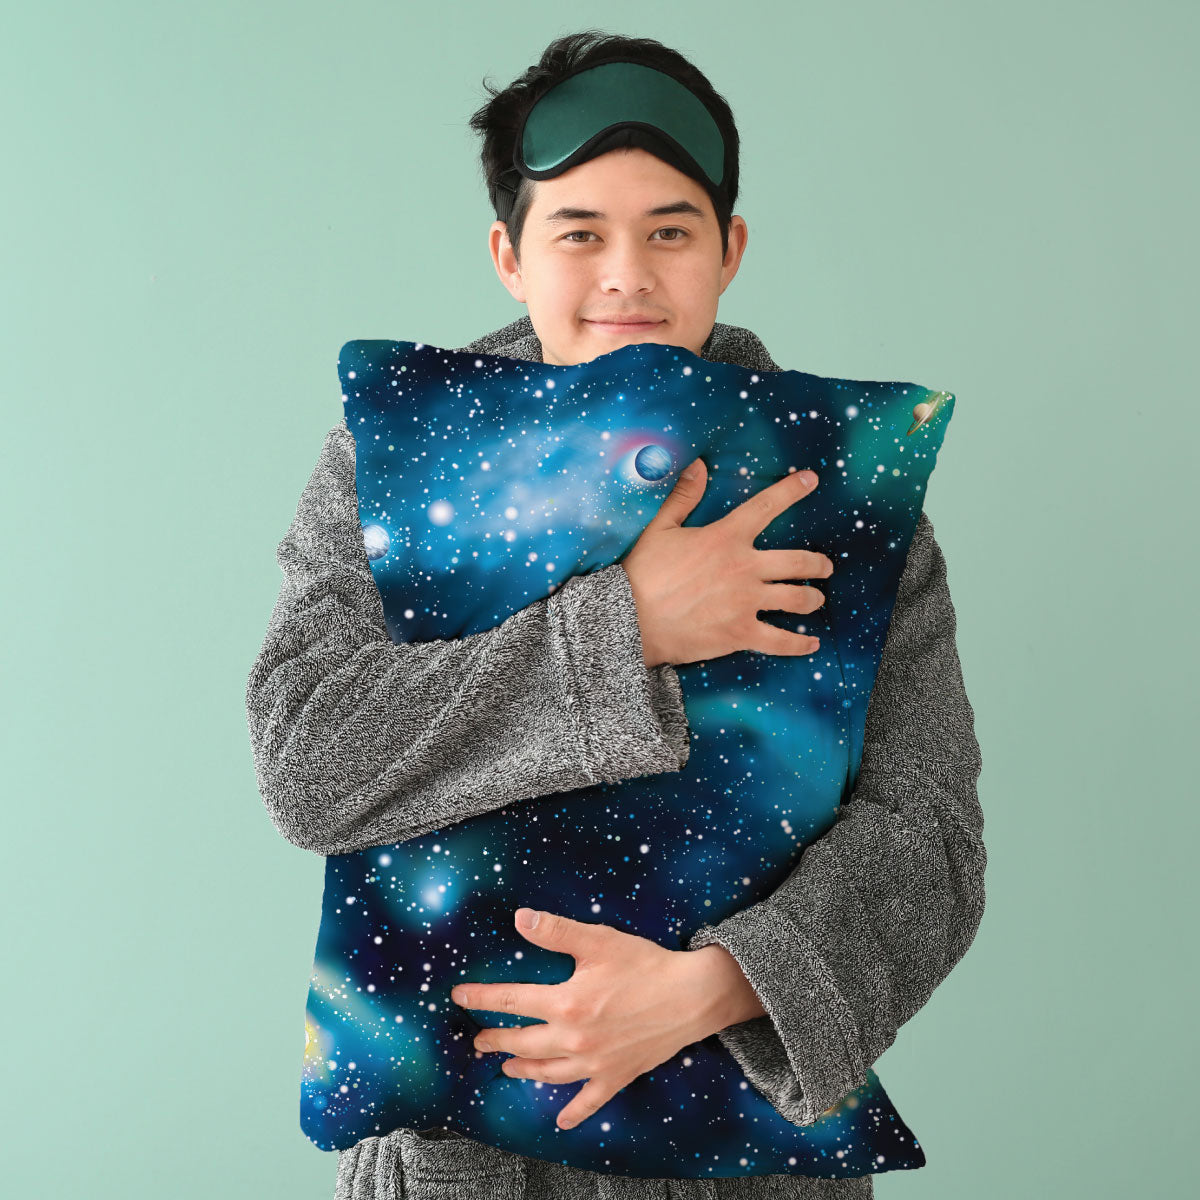 Universe Sensory Pillowcase